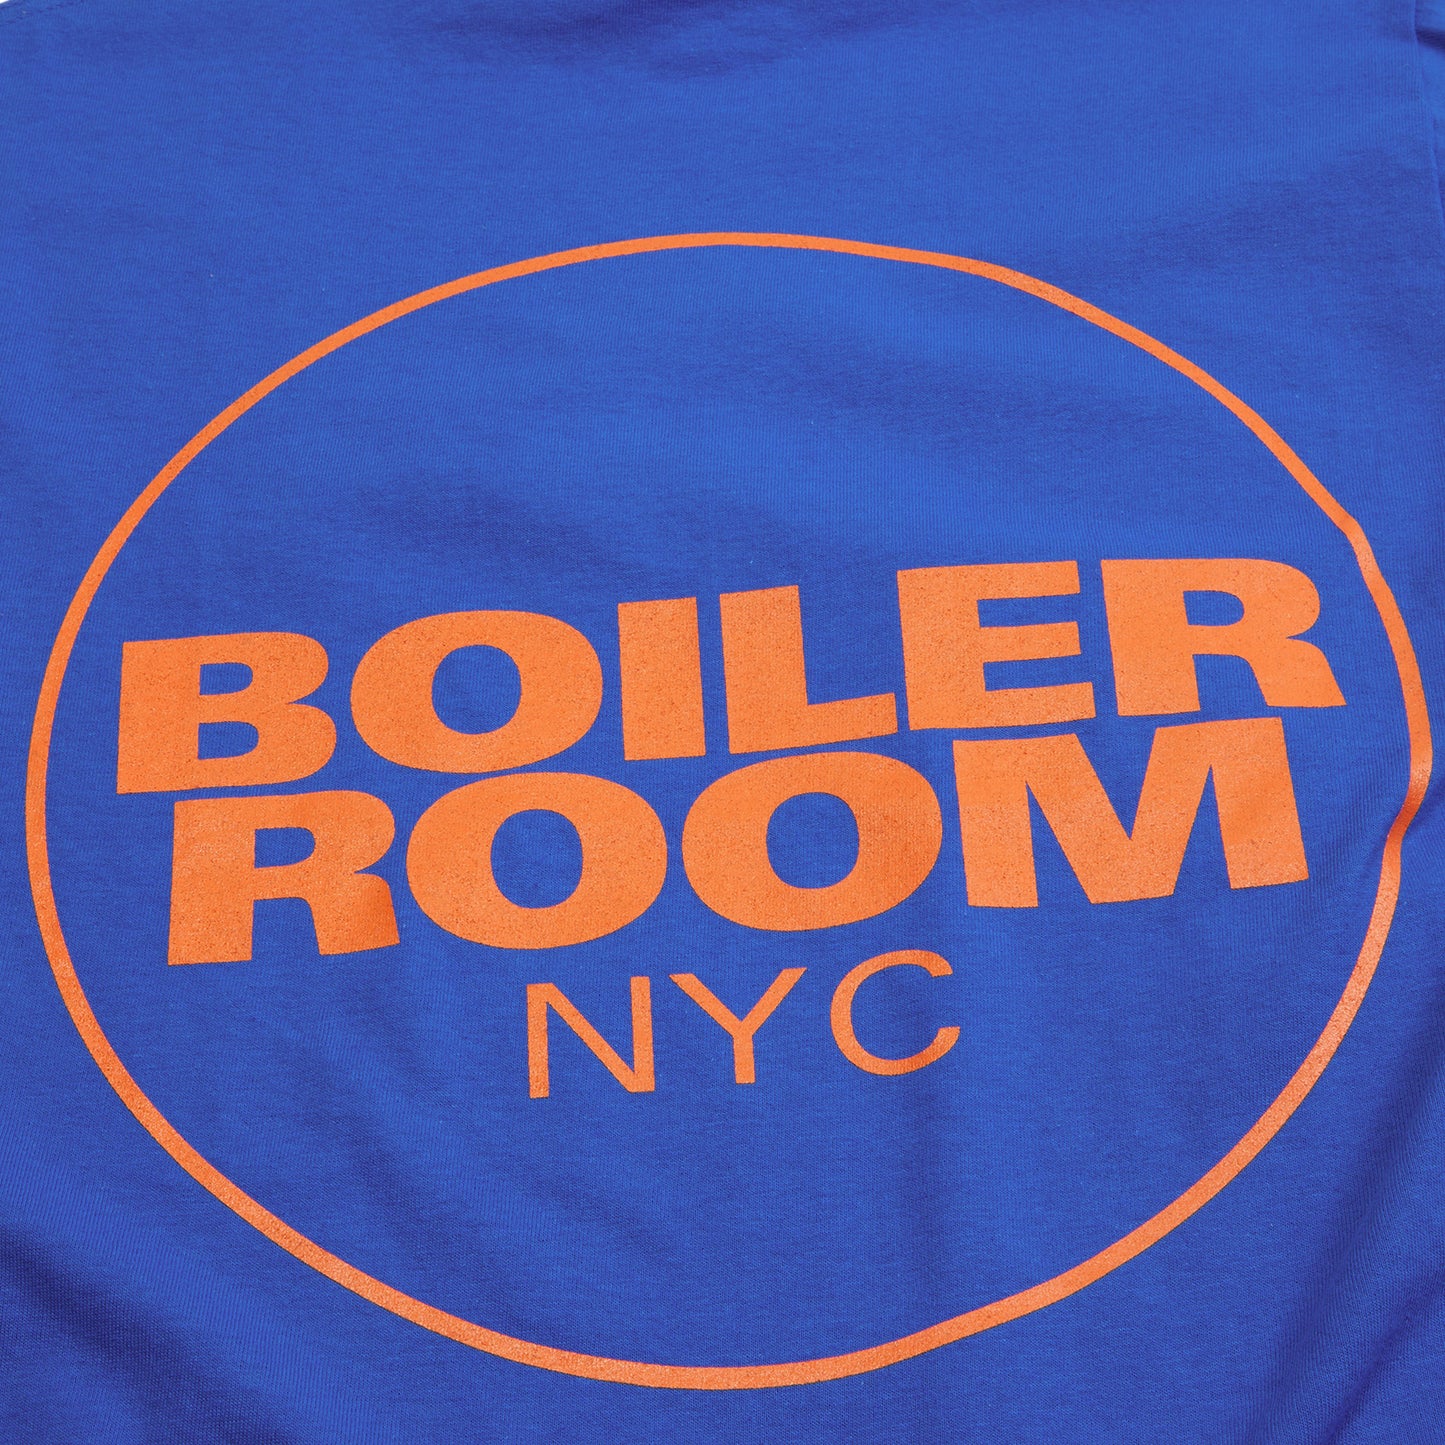 Boiler Room Boiler Room BR NYC Logo Tee (Blue)